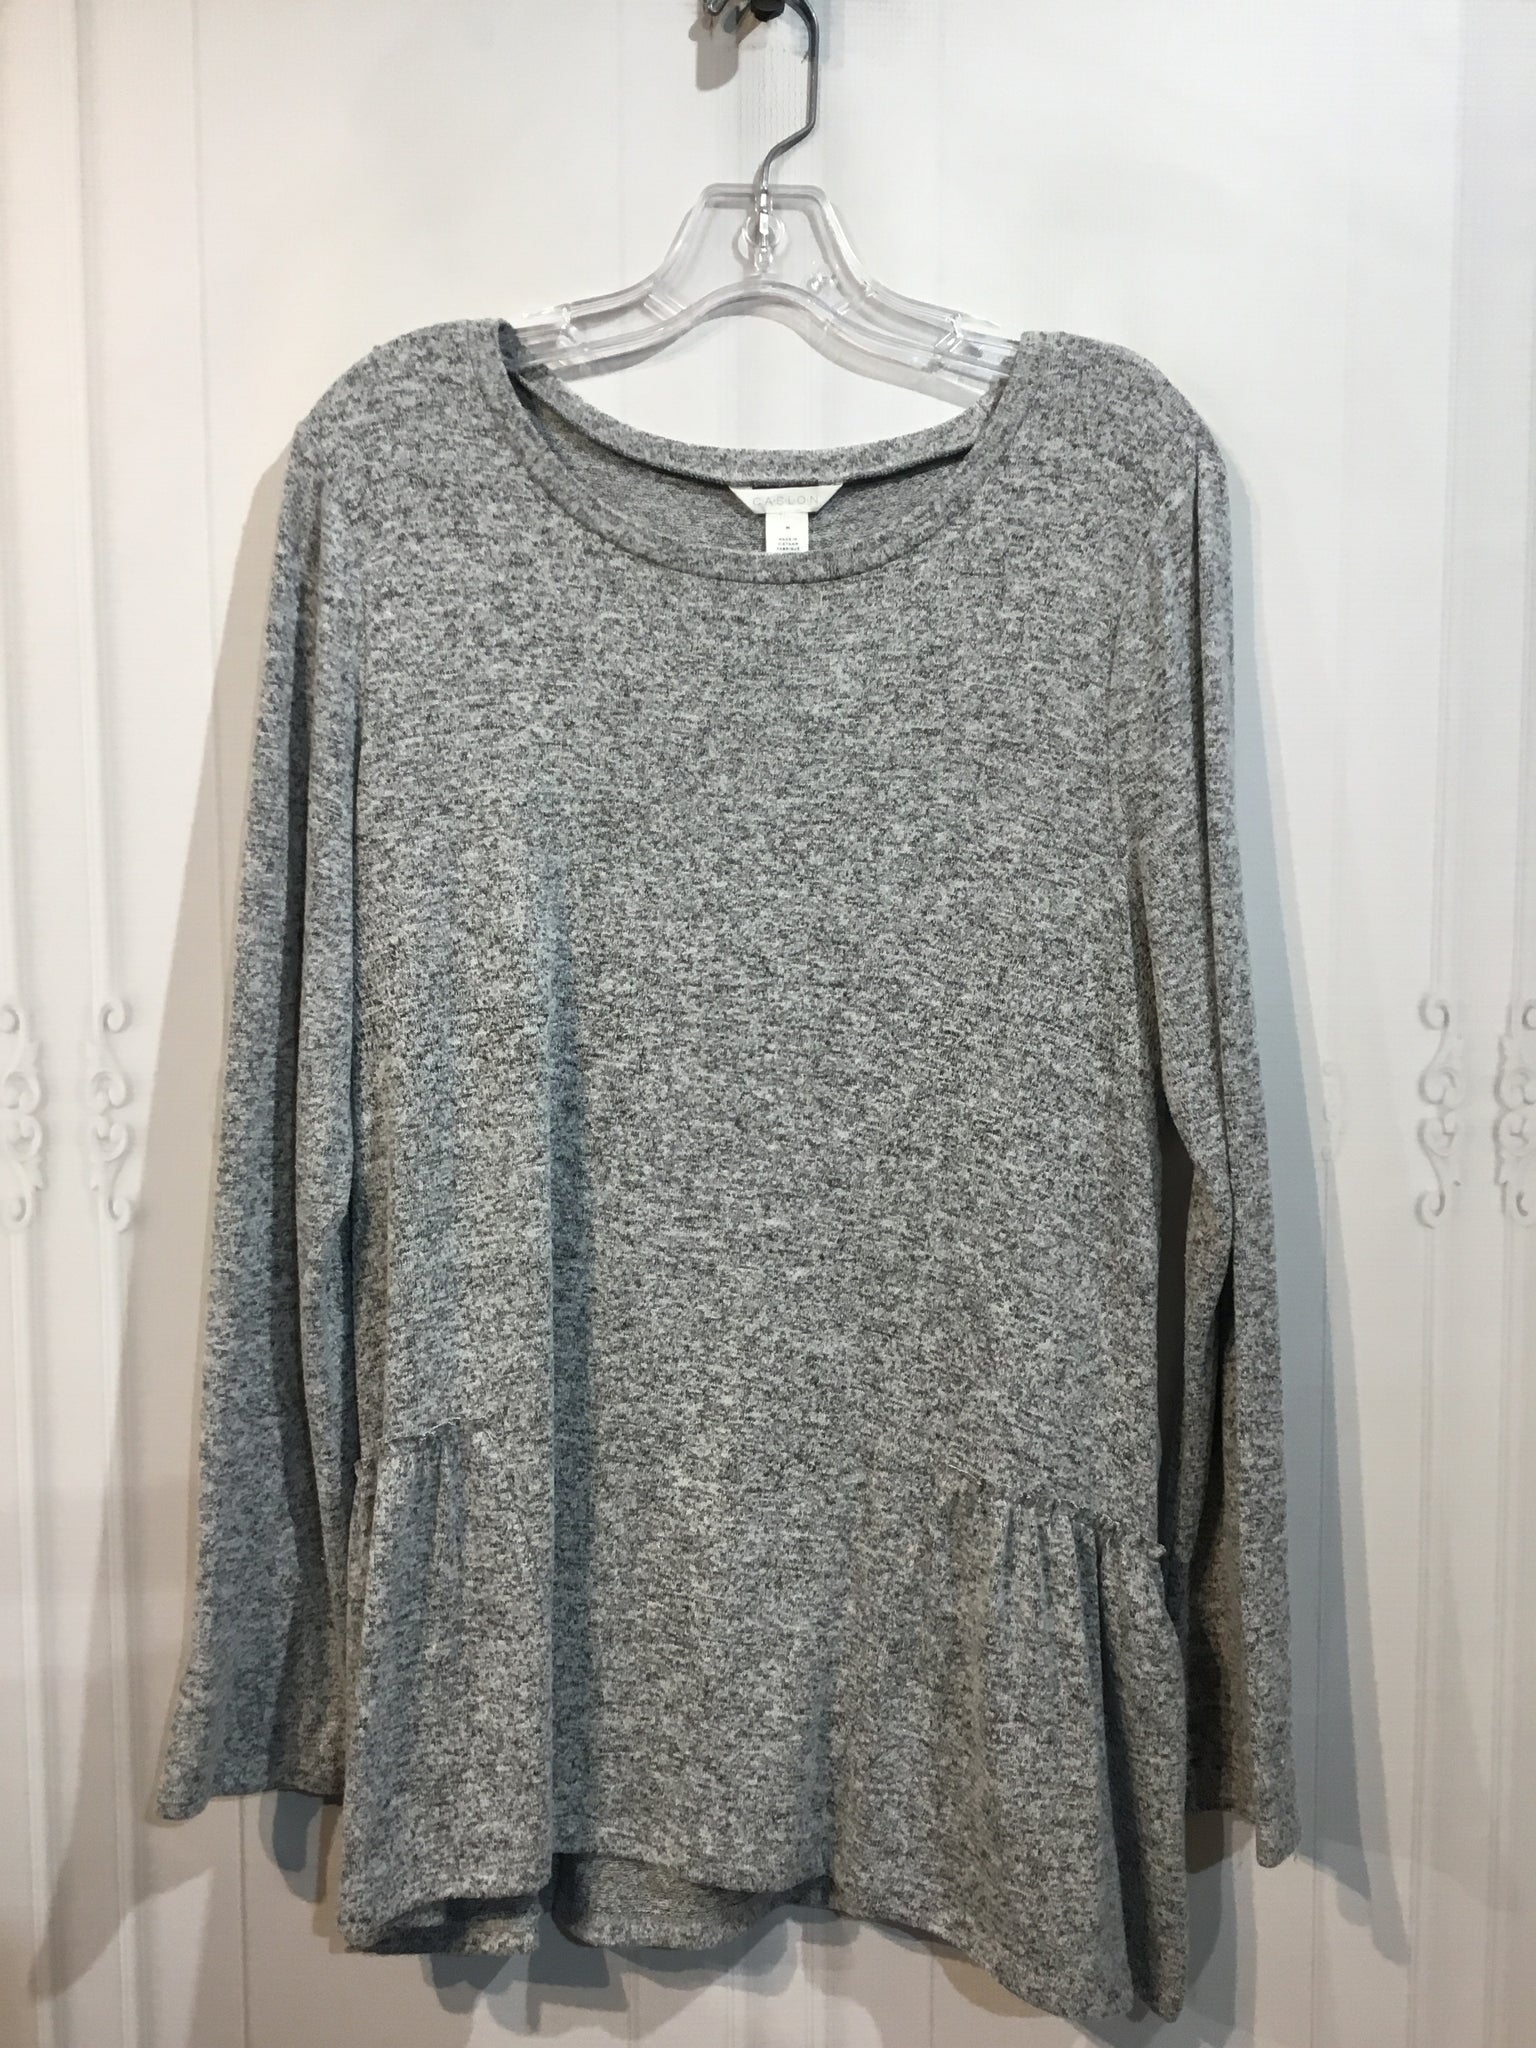 Caslon Size M/8-10 Grey Sweater